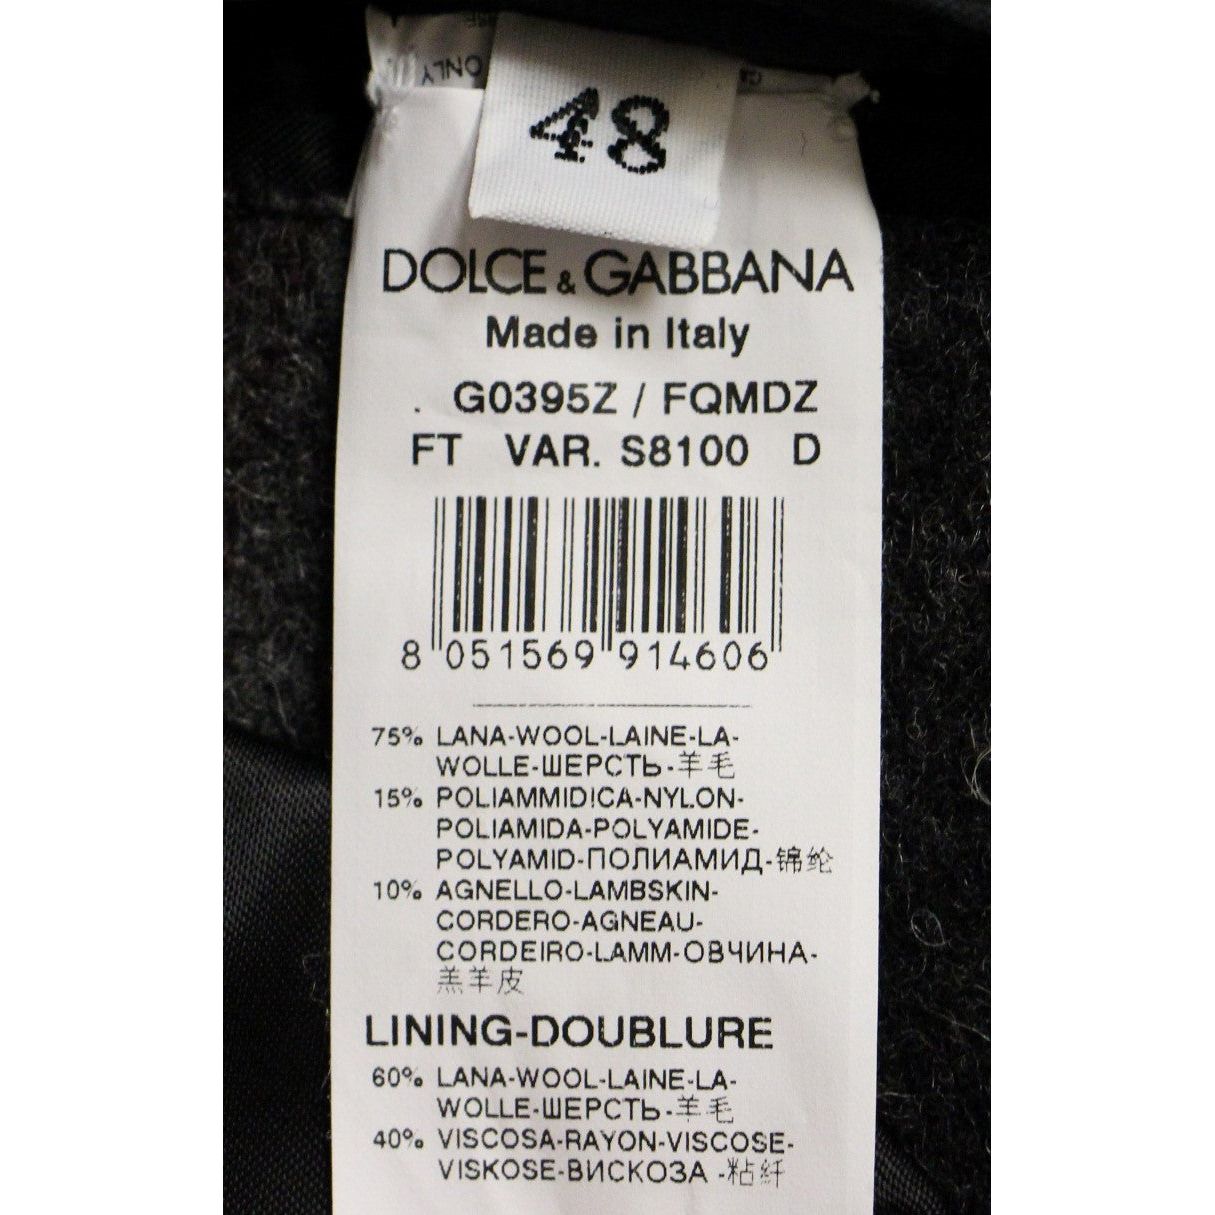 Dolce & Gabbana Sicilia Checkered Wool Blend Coat Coats & Jackets gray-double-breasted-coat-jacket 53557-gray-double-breasted-coat-jacket-8.jpg